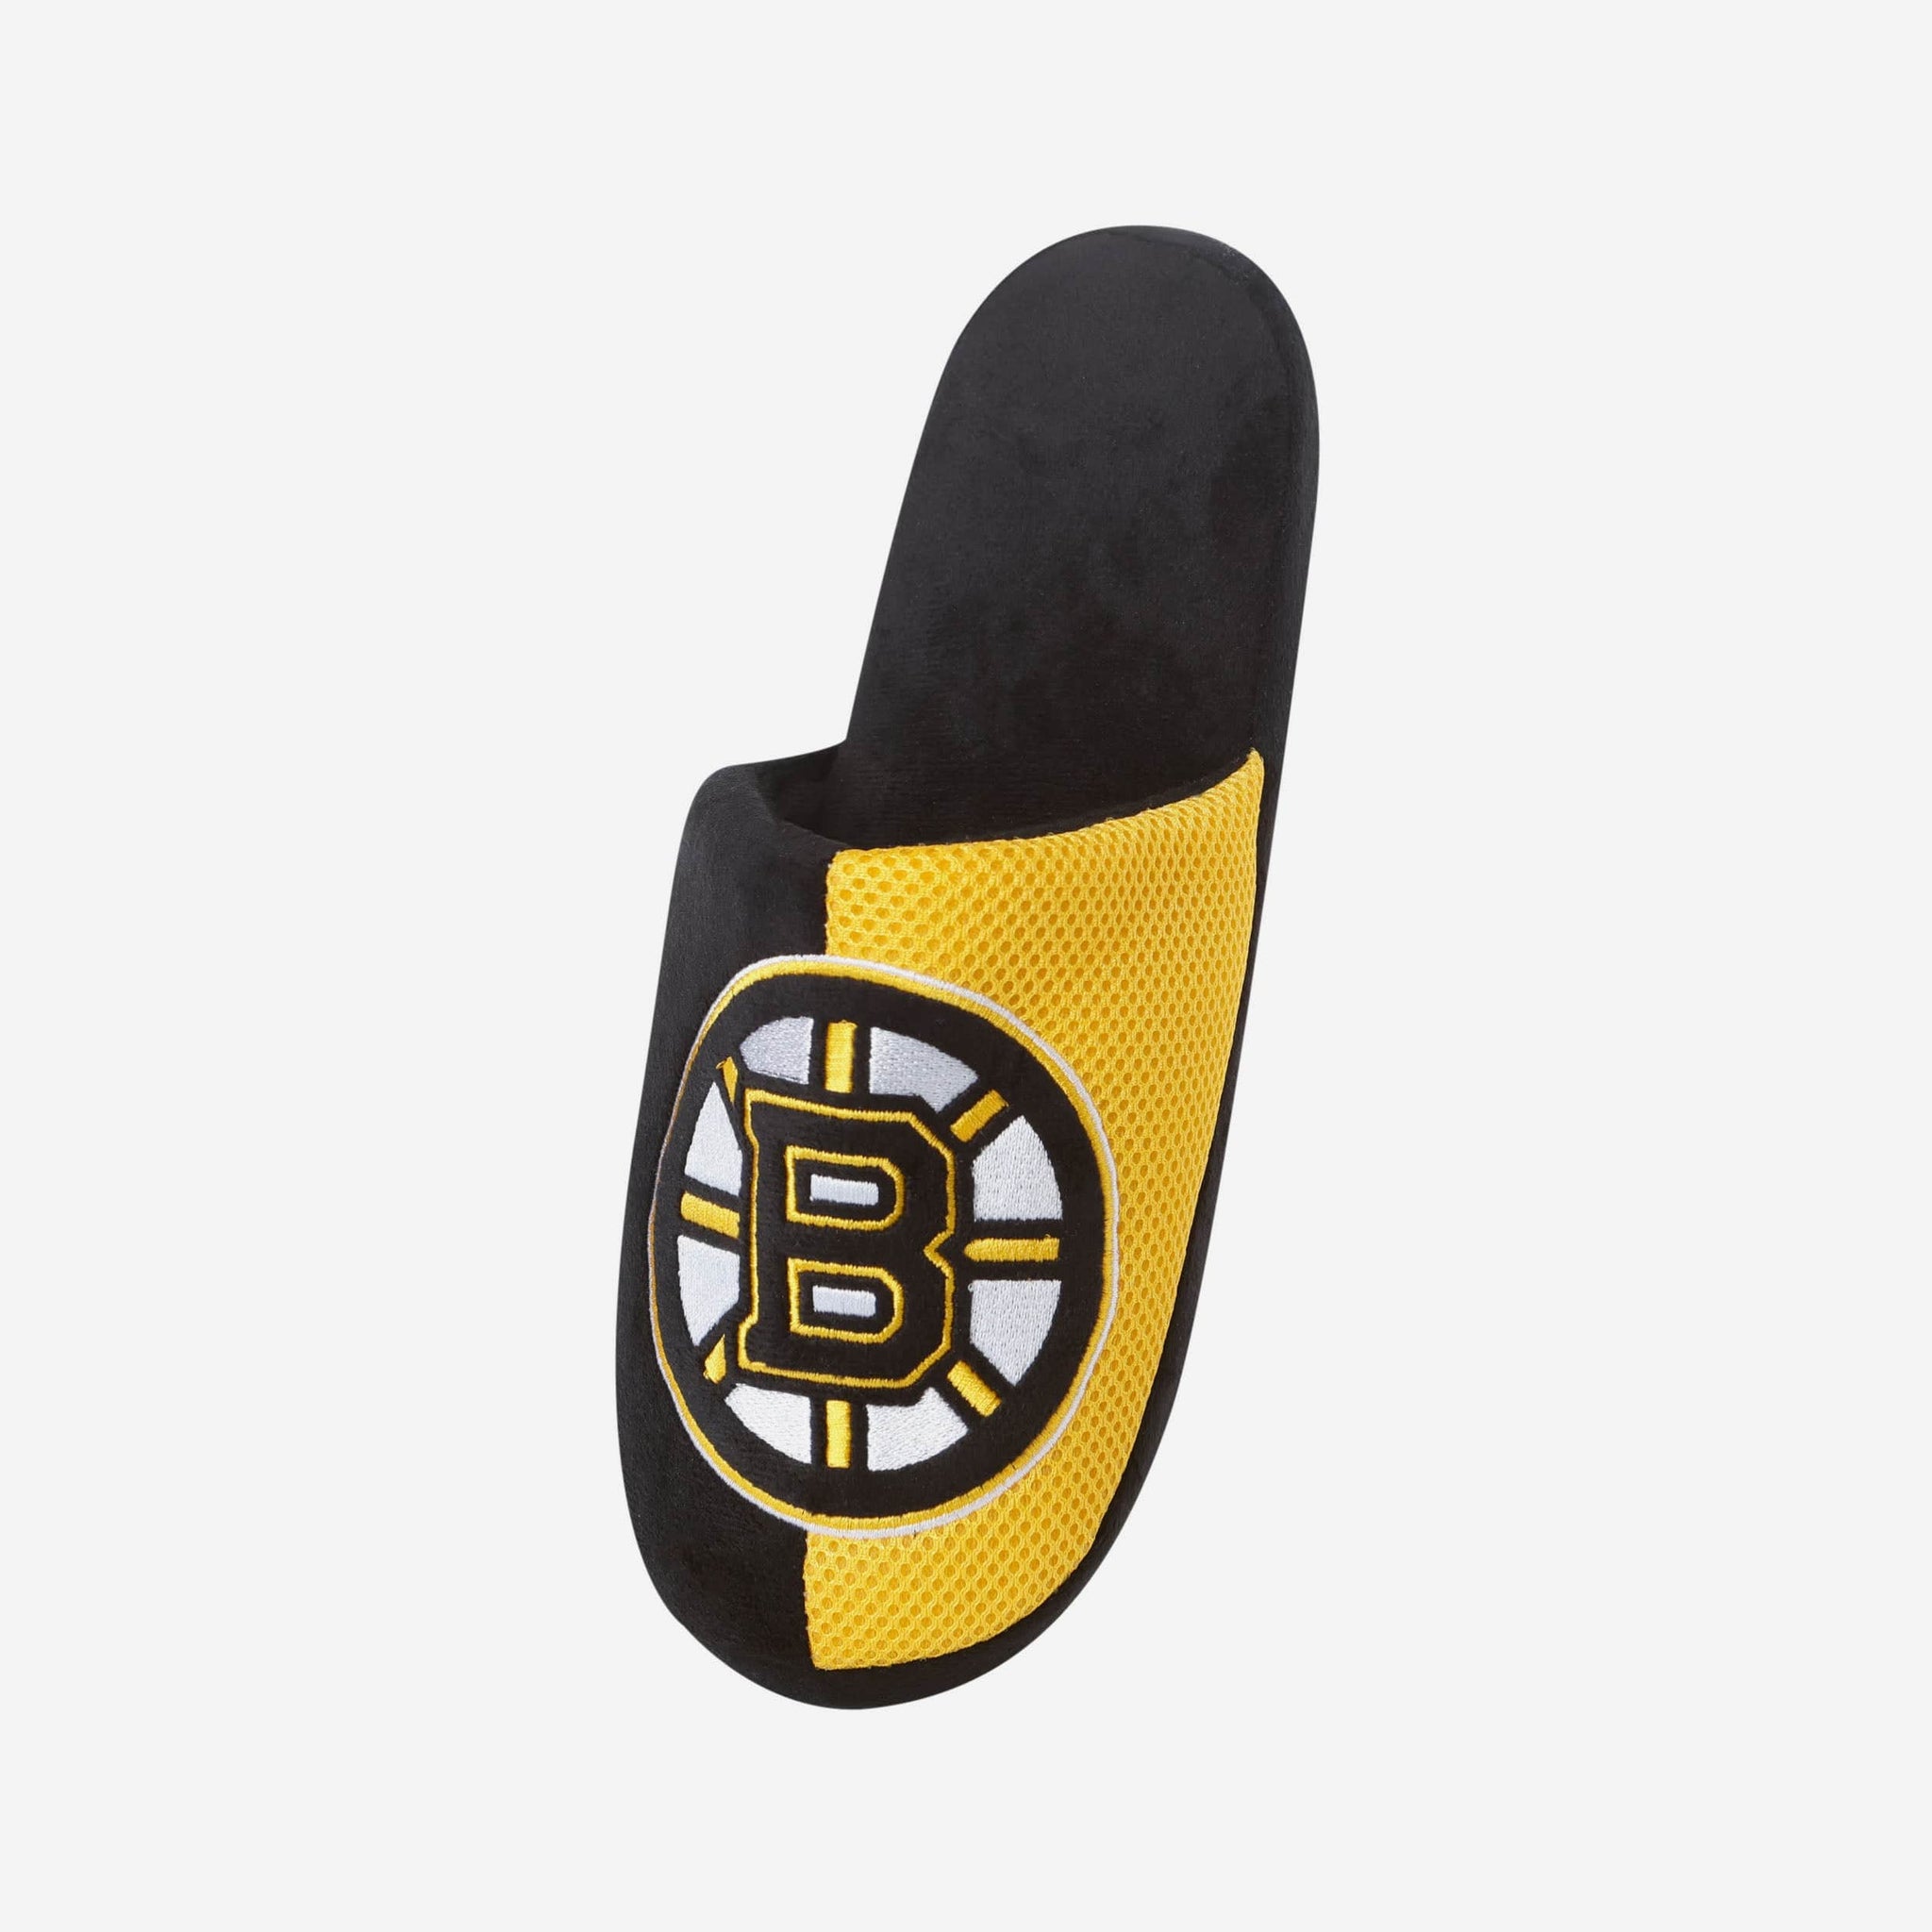 Boston Bruins Apparel, Collectibles, and Fan Gear. FOCO